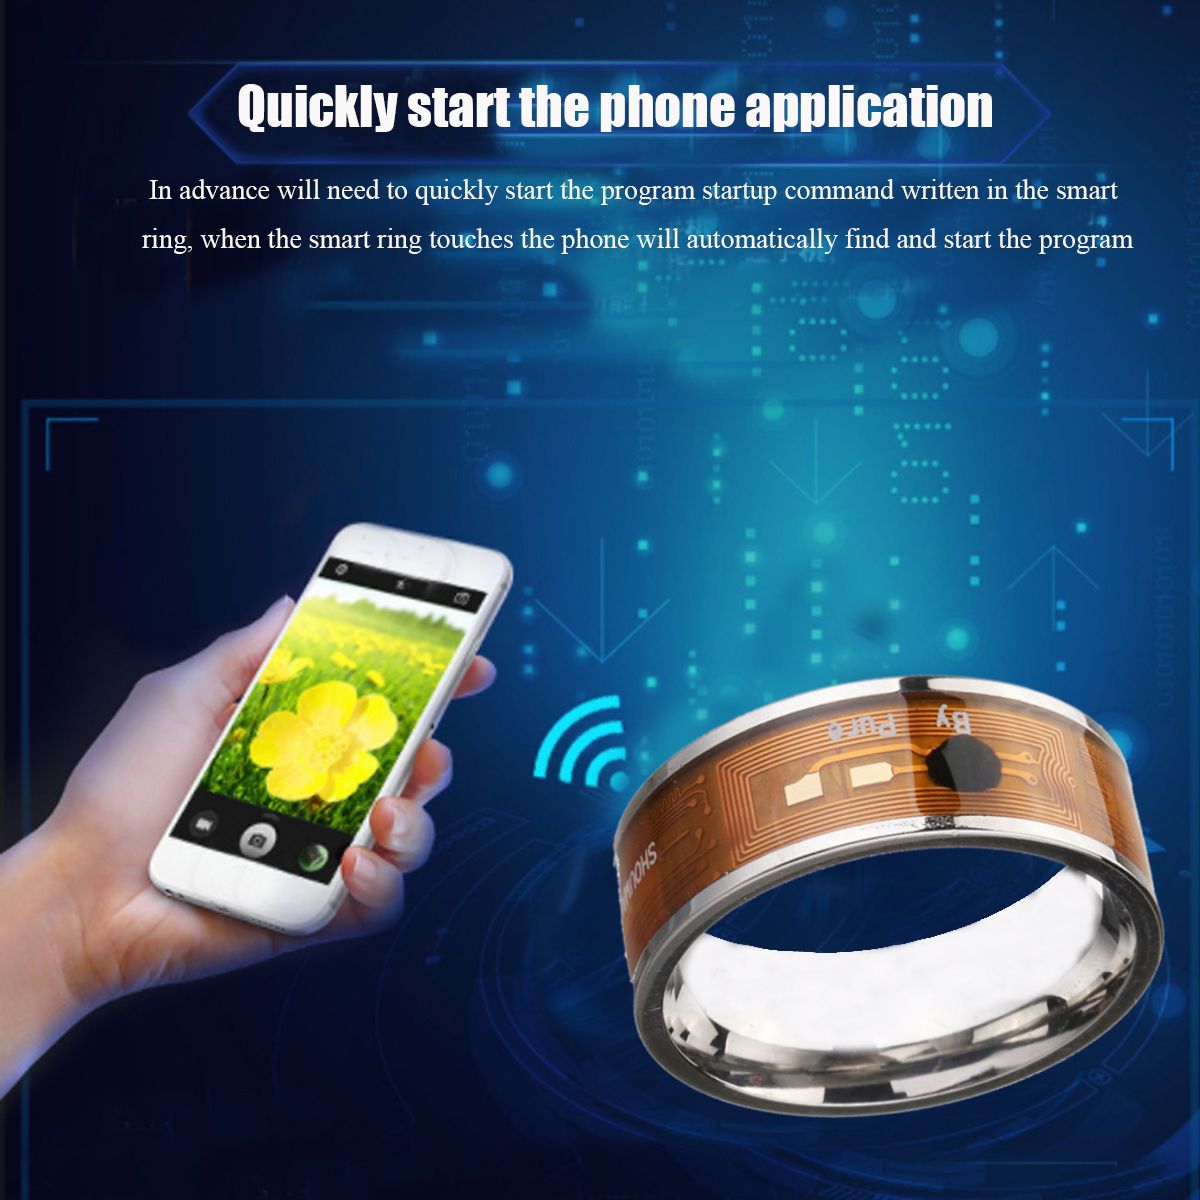 Blue-NTAG213-NFC-Tag-Ring-Multifunctional-Intelligent-Ring-Titanium-Steel-Smart-Wear-Finger-Digital--1559058